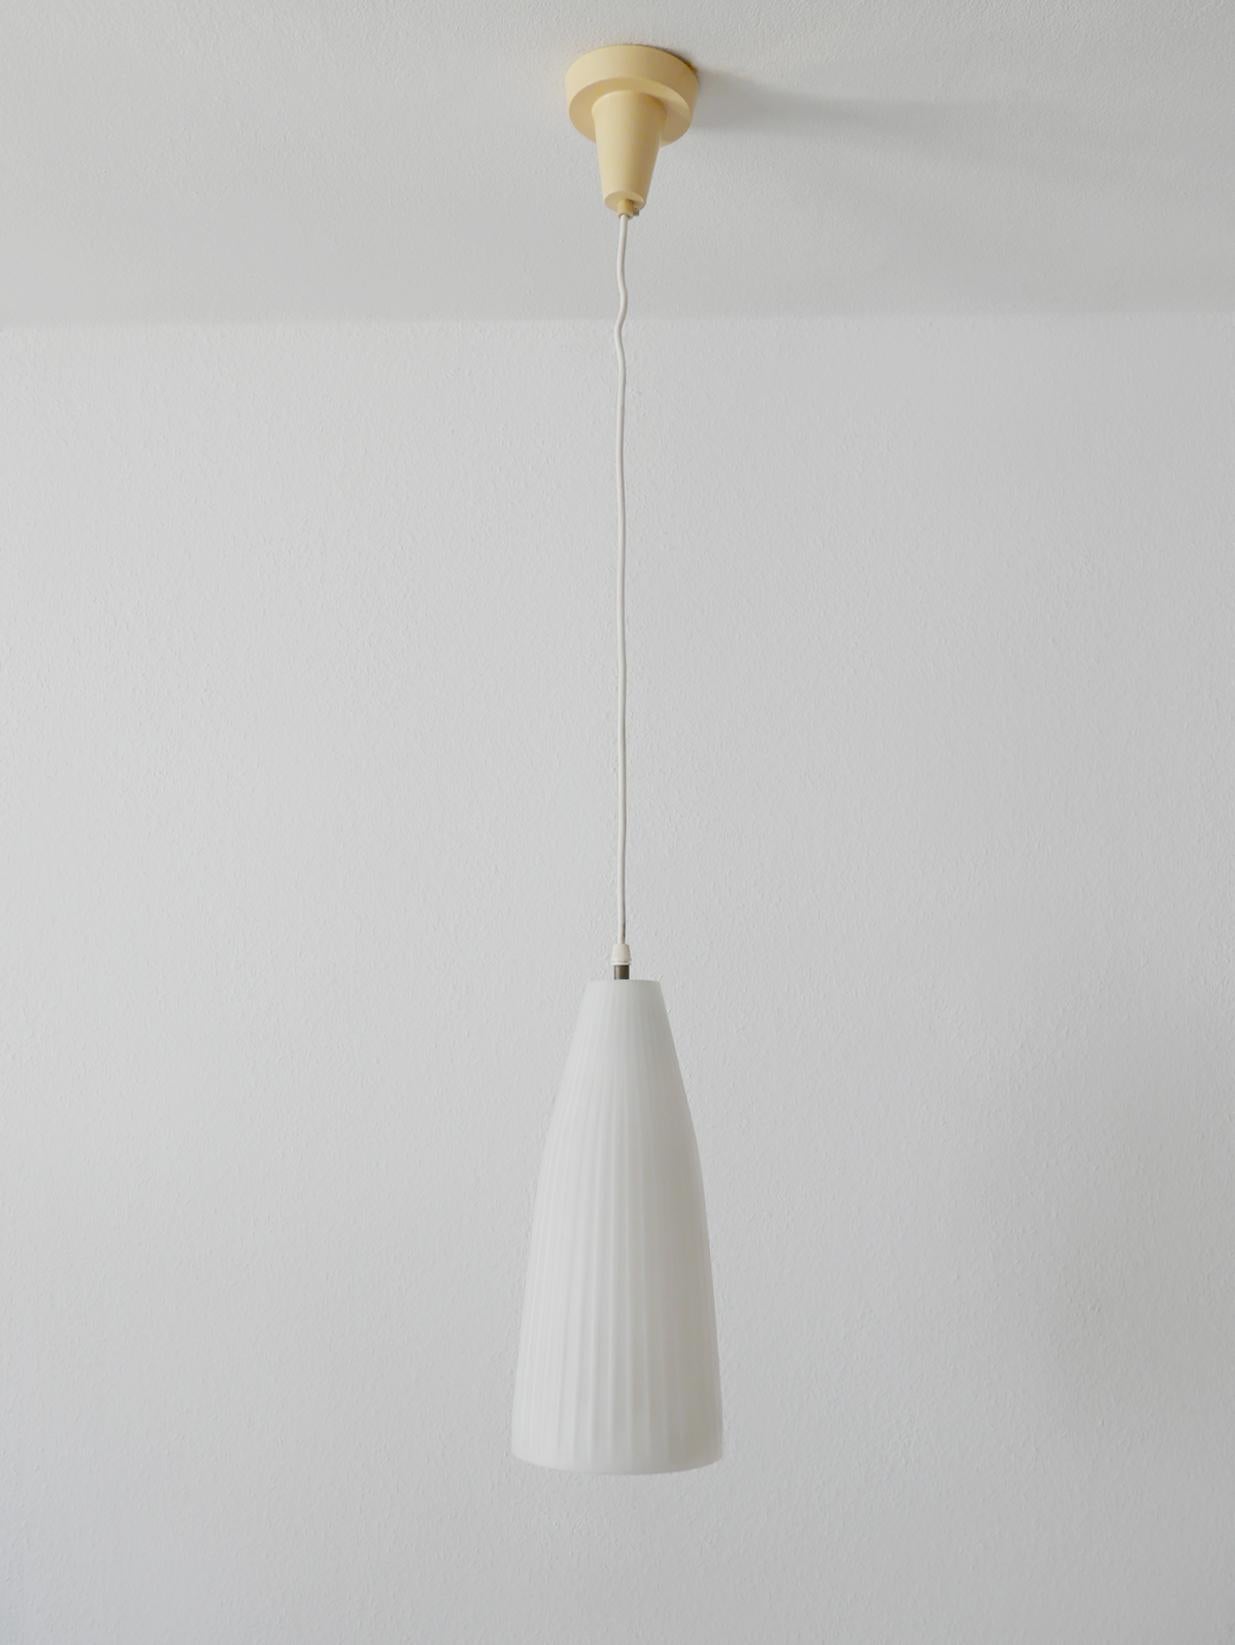 Mid-20th Century Mid-Century Modern Pendant Lamp by Aloys F. Gangkofner for Peill & Putzler For Sale